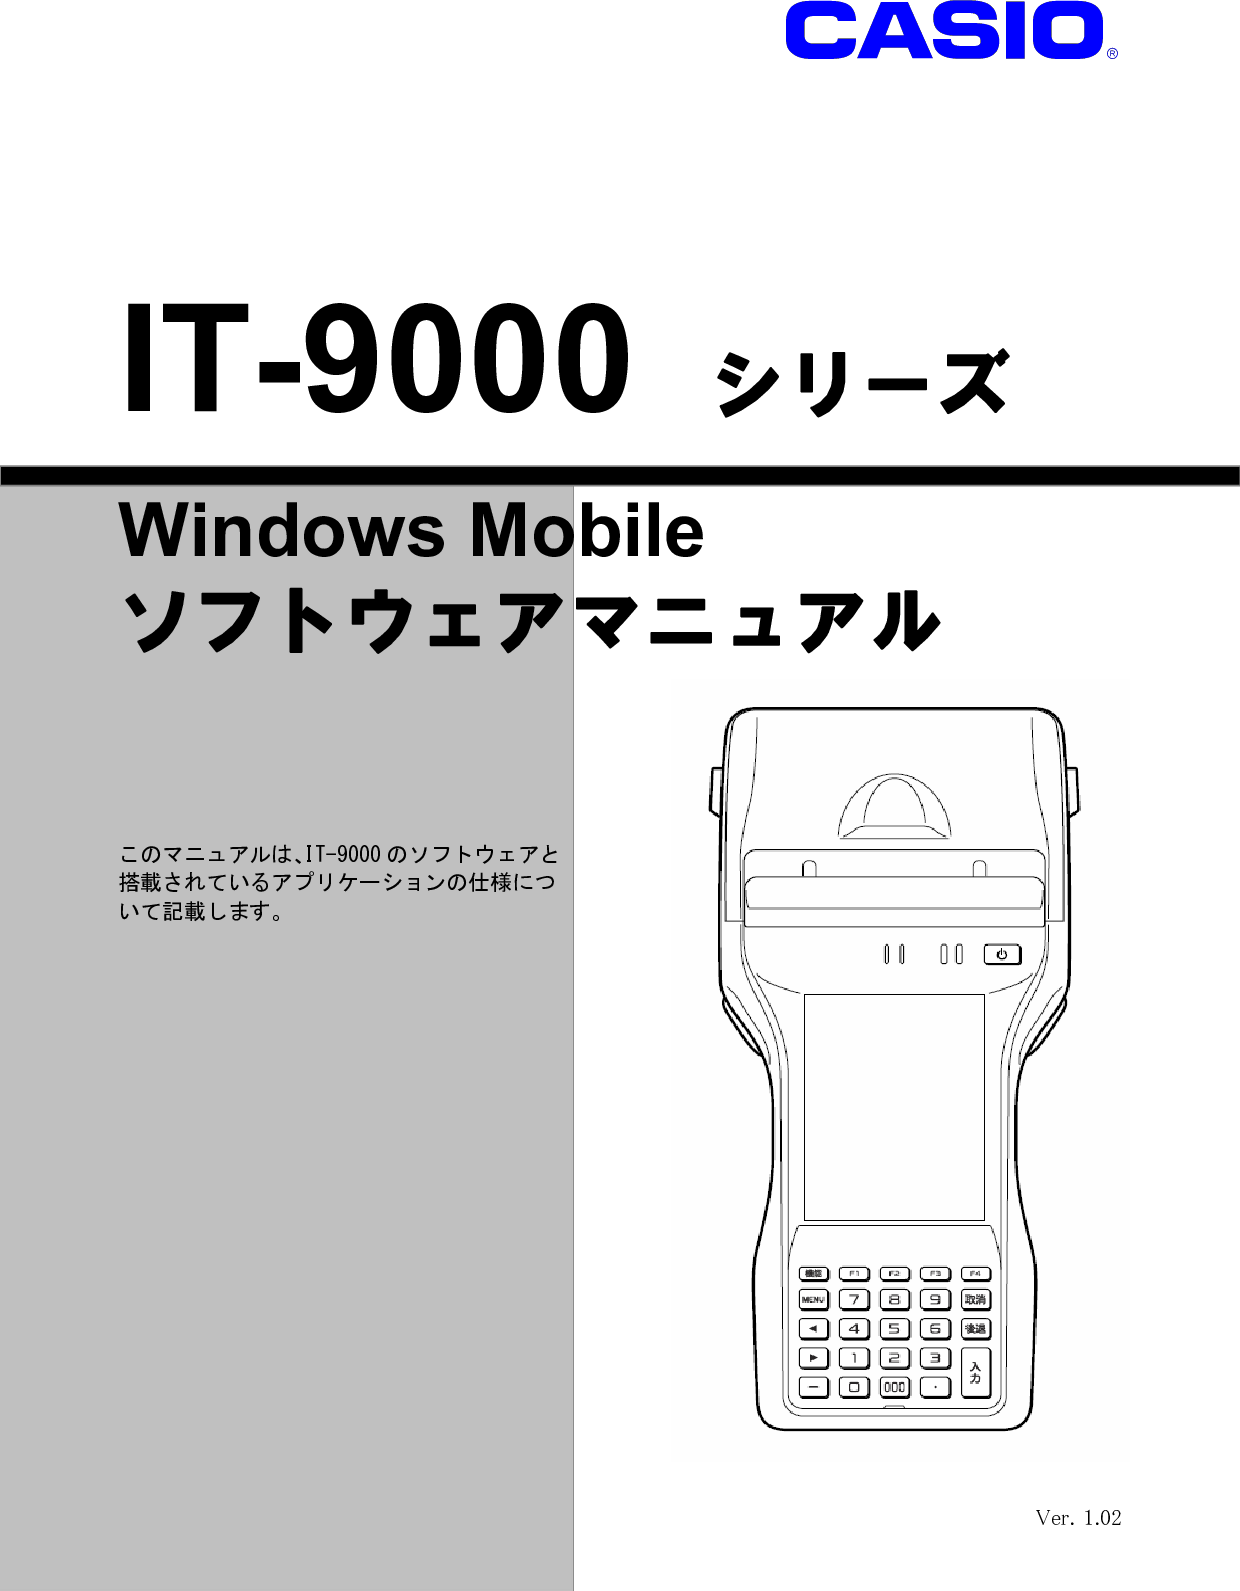 Casio Windows Mobileソフトウェアマニュアルver 1 02 15年12月16日 It9000wm Soft102